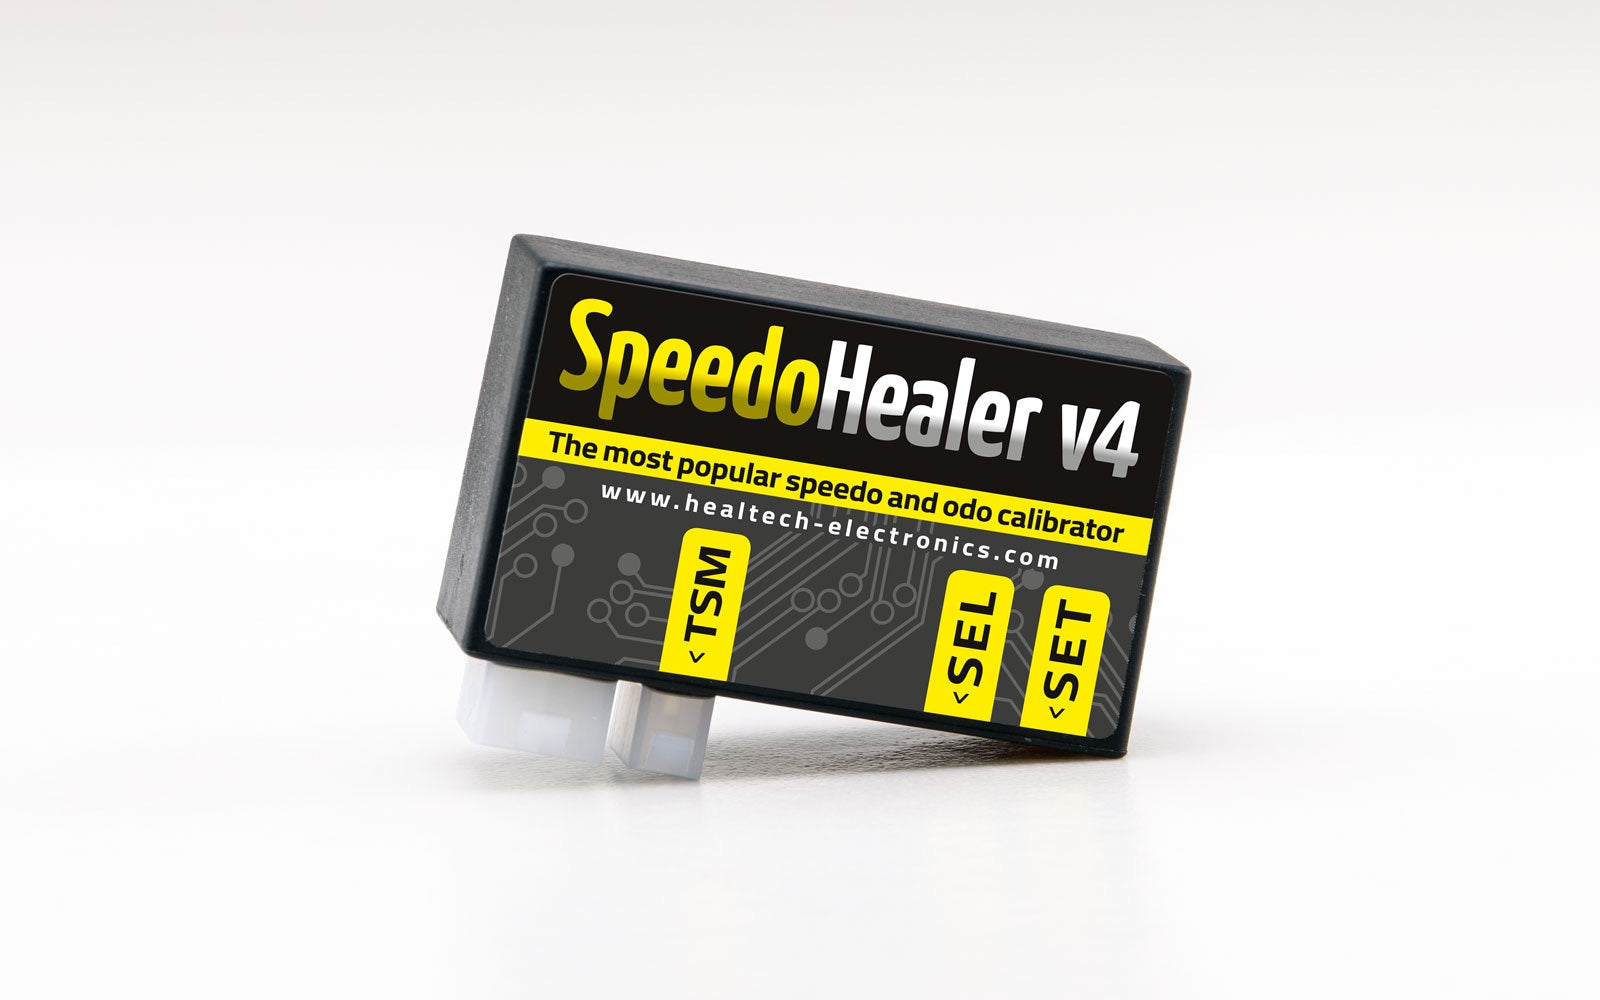 Speedo Healer V4 - Triumph - Averys Motorcycles